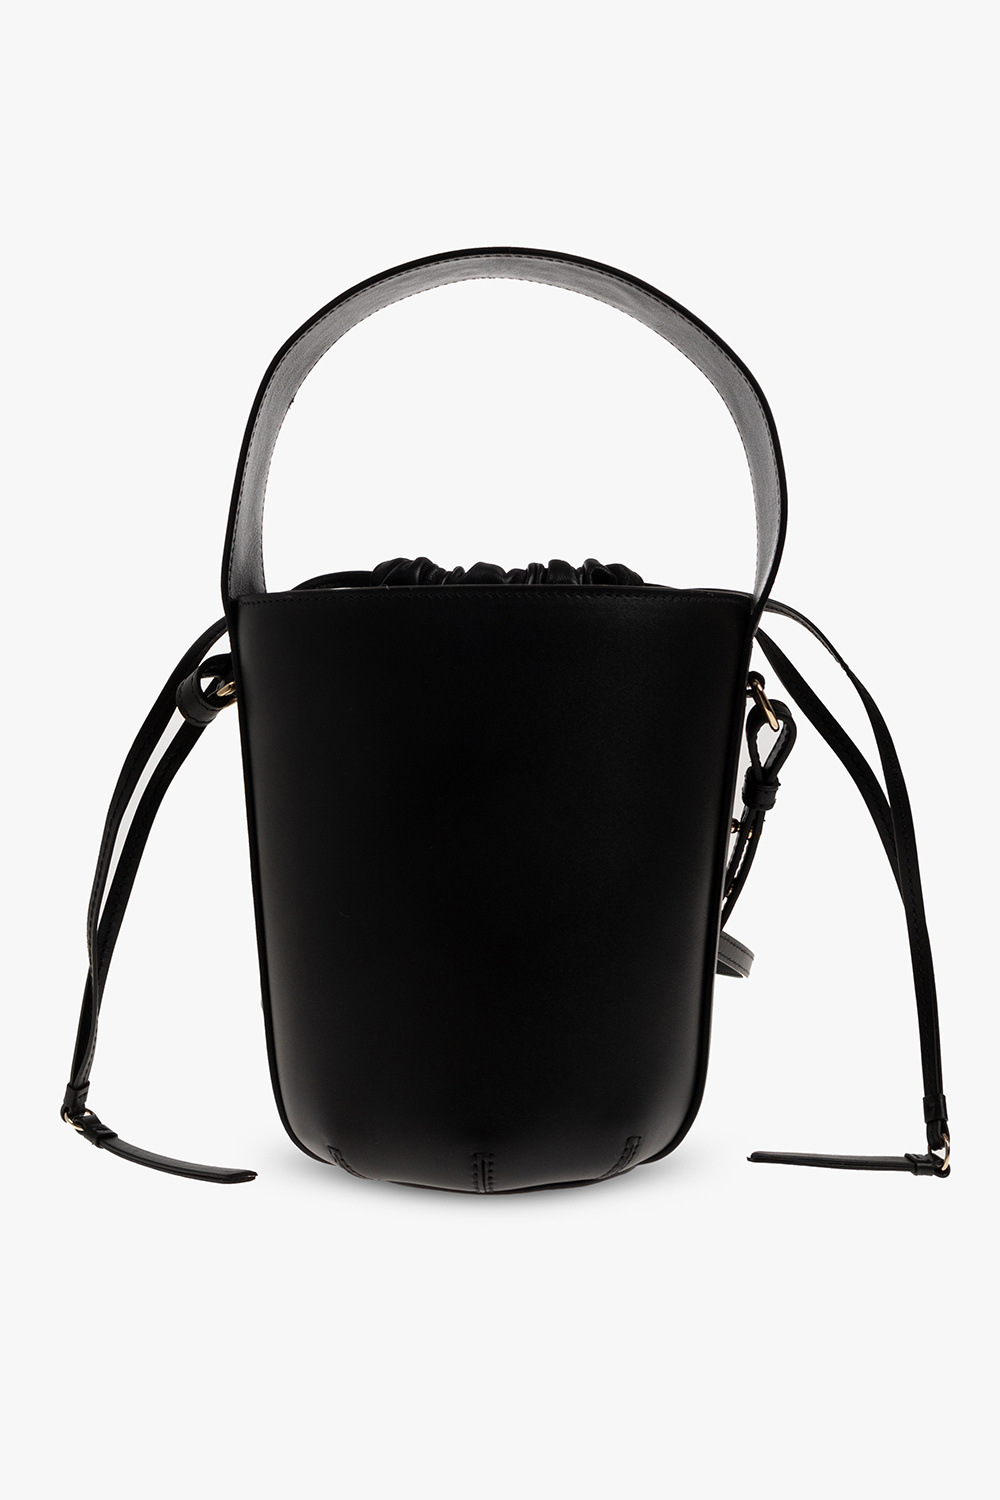 Chloé ‘Chloé Sense’ bucket shoulder bag